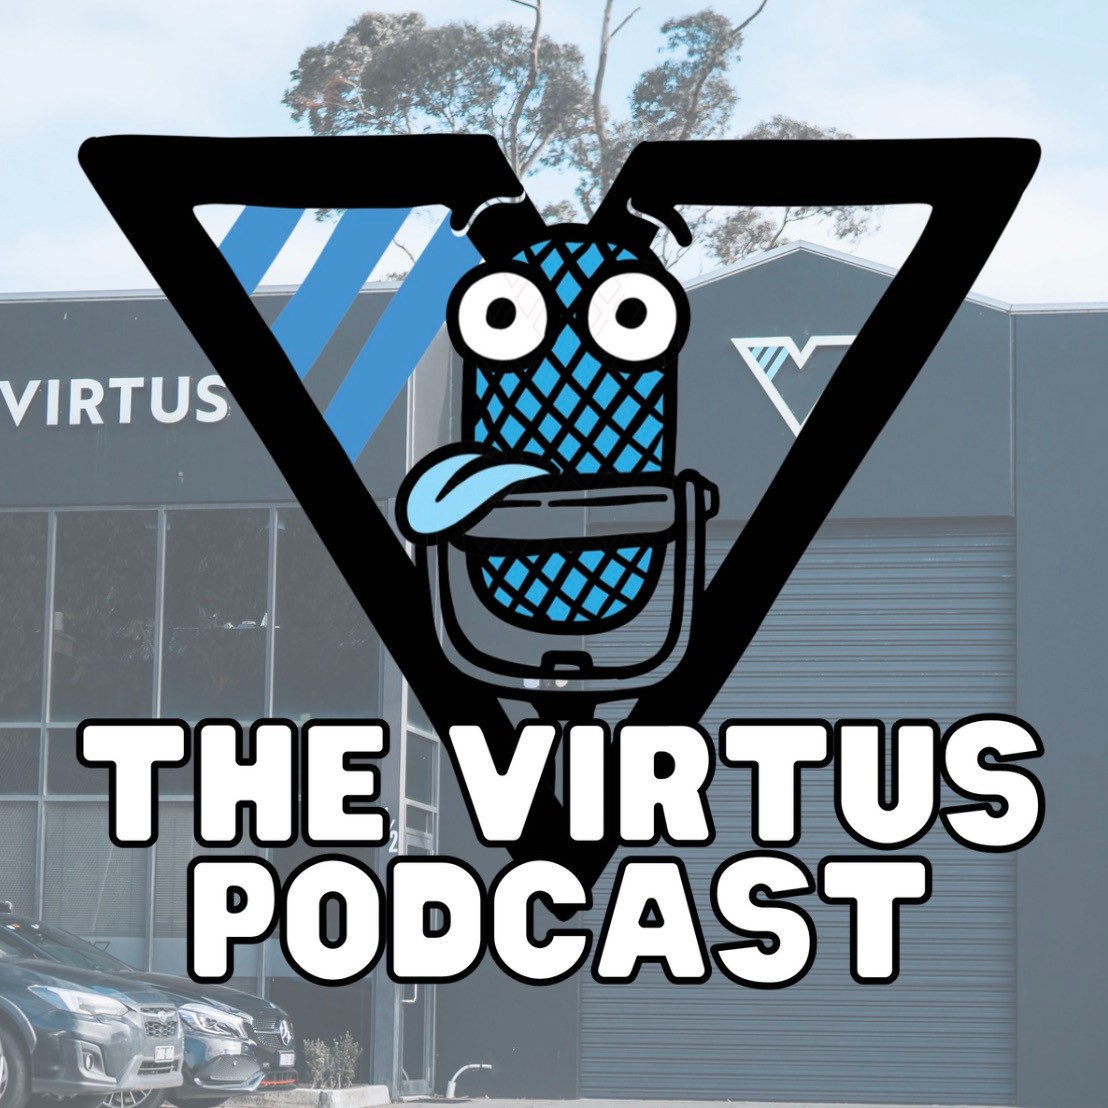 The Virtus Podcast